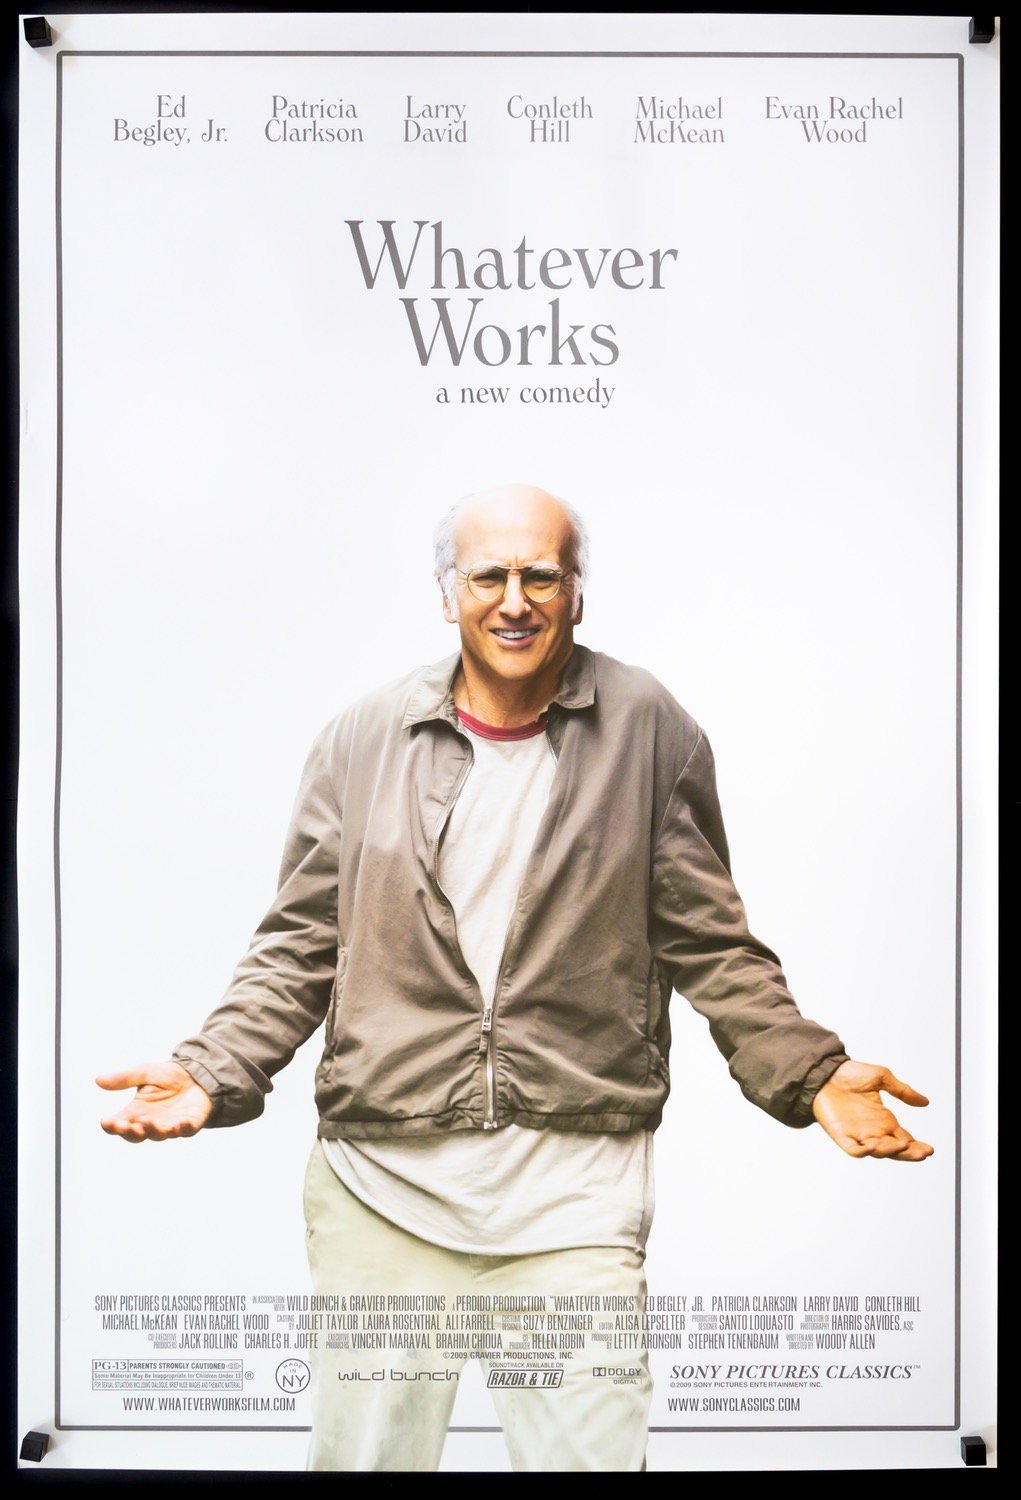 Whatever Works (2009) original movie poster for sale at Original Film Art